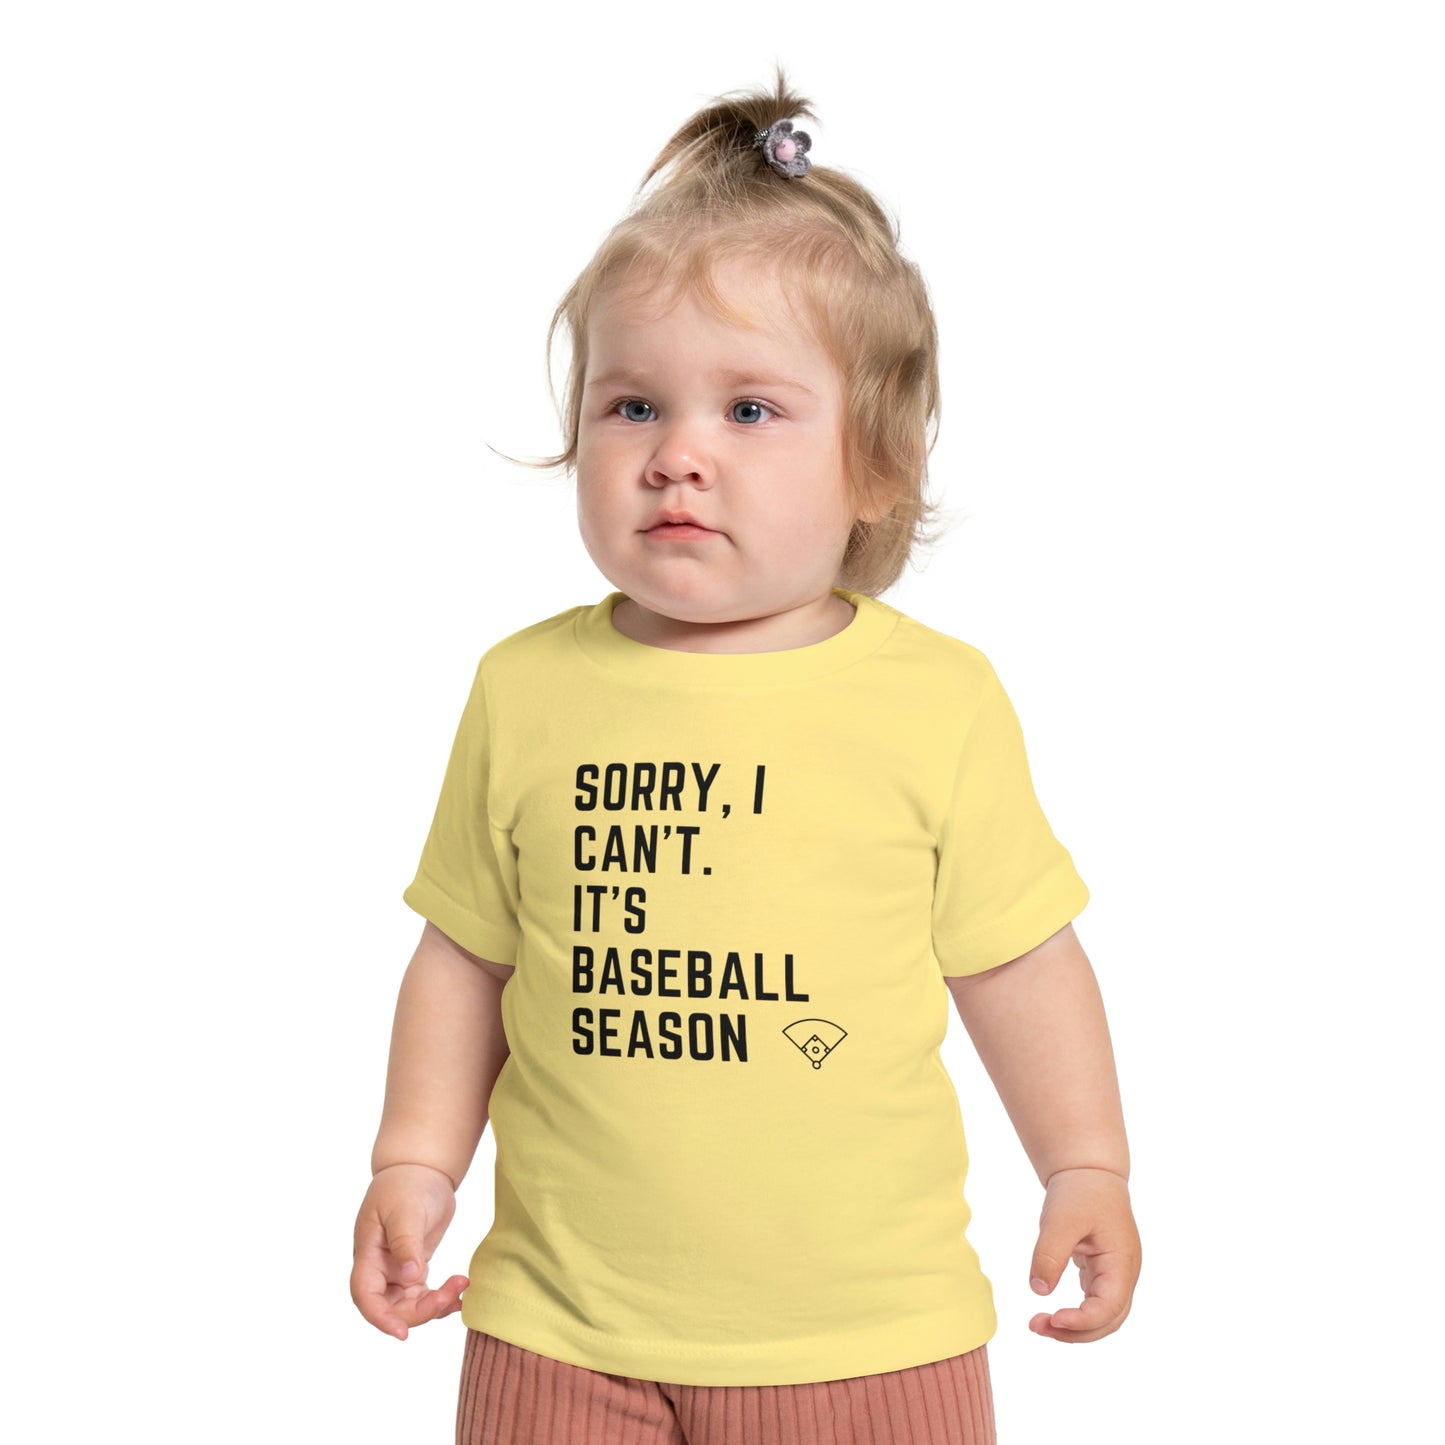 The “Sorry, I Can’t. It’s Baseball Season” Baby Short Sleeve T-Shirt